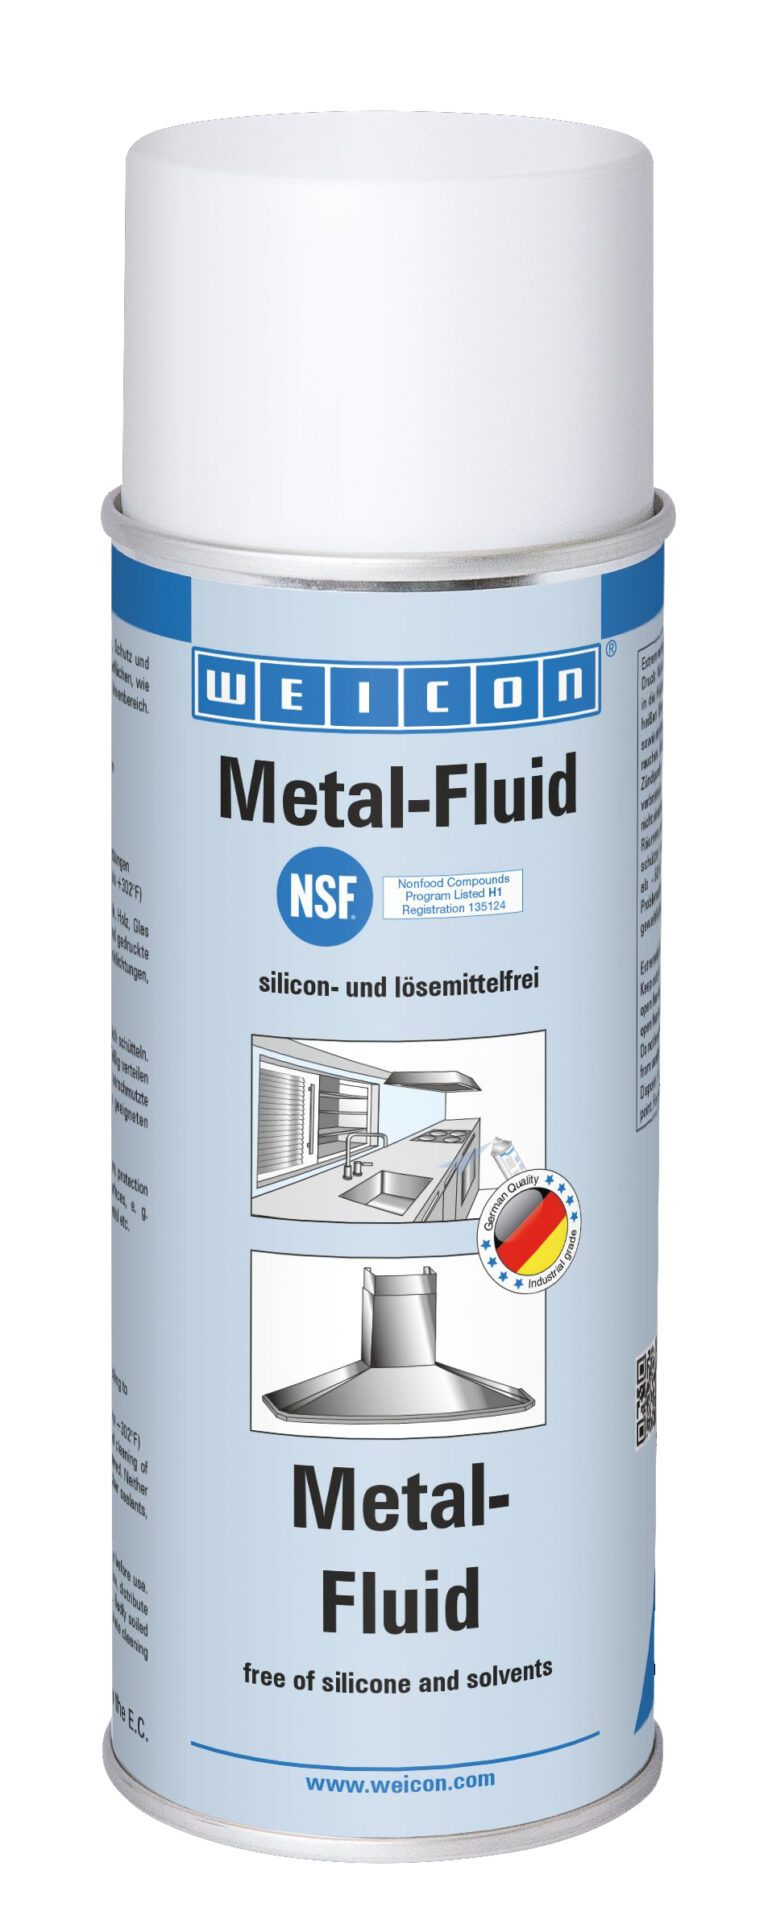 Metal-Fluid